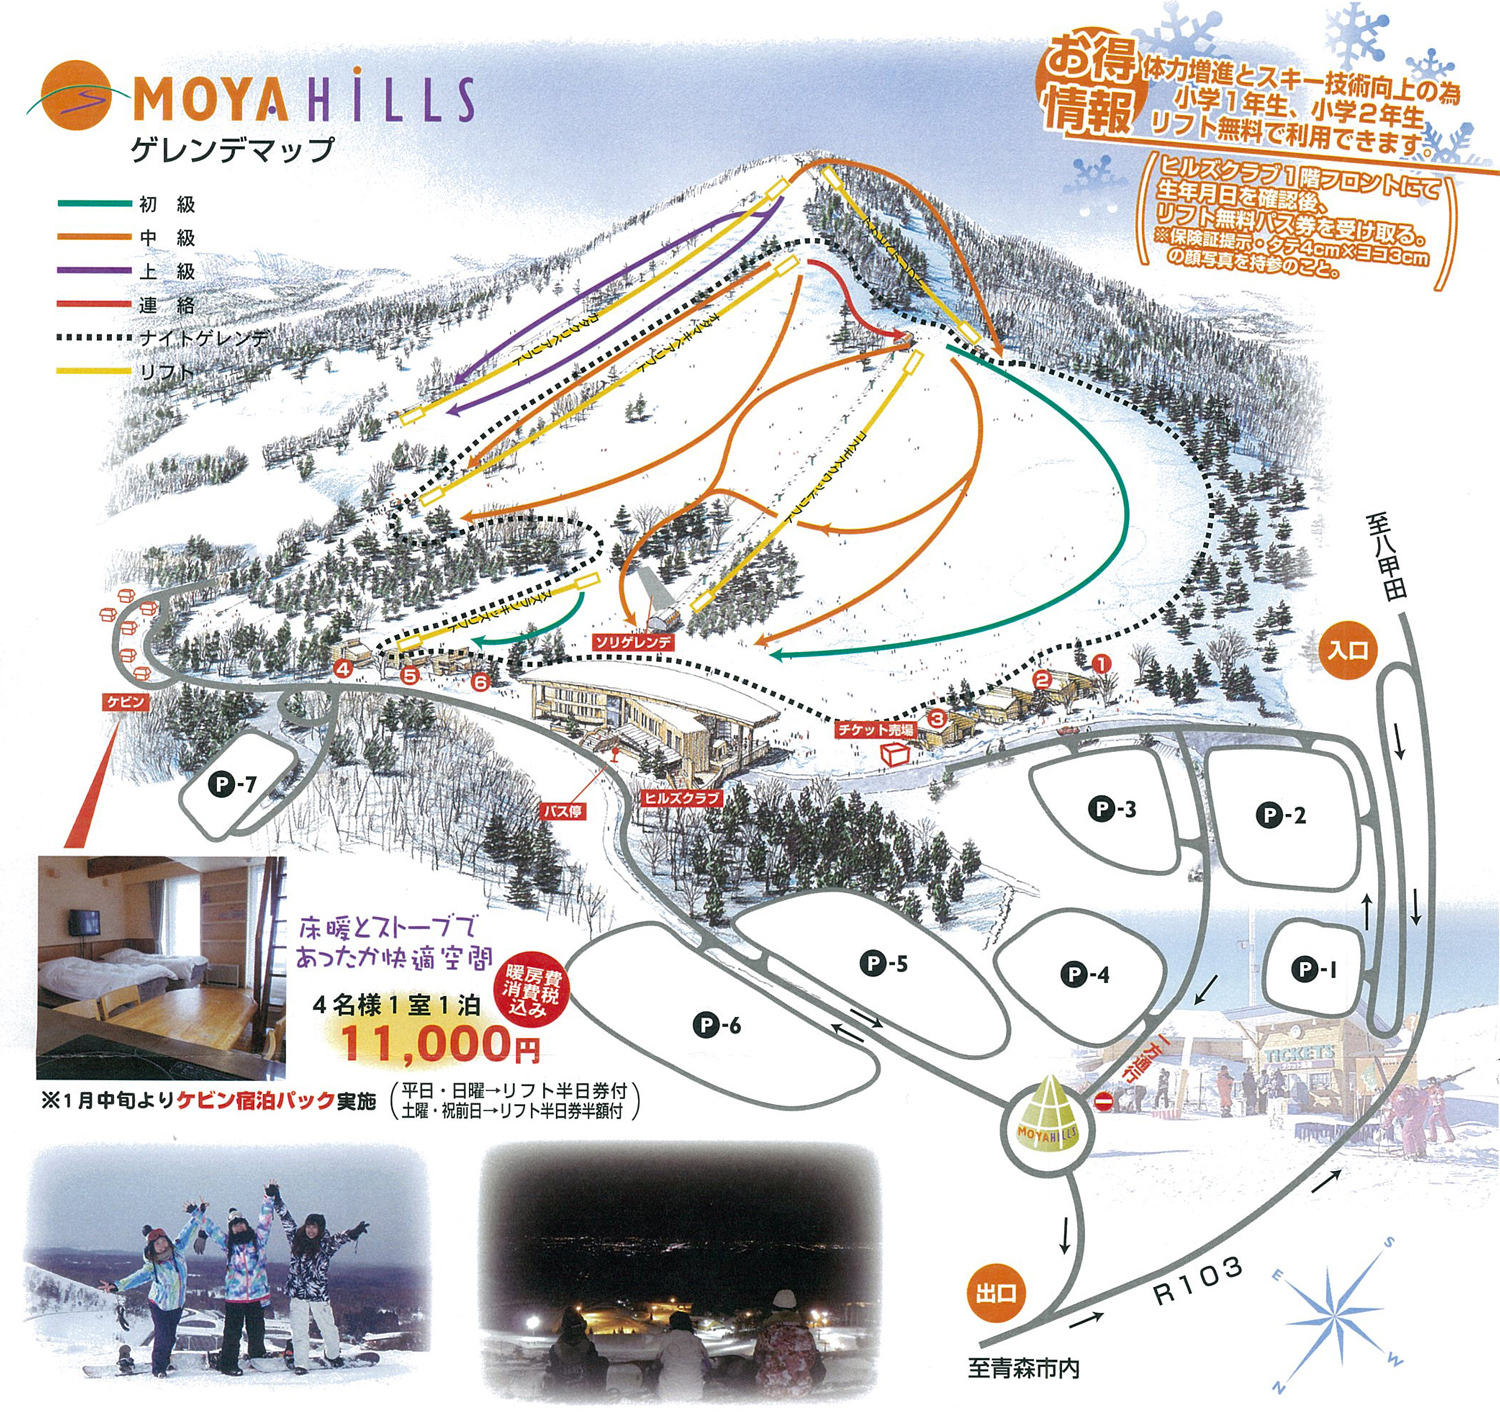 Moya Hills Piste / Trail Map